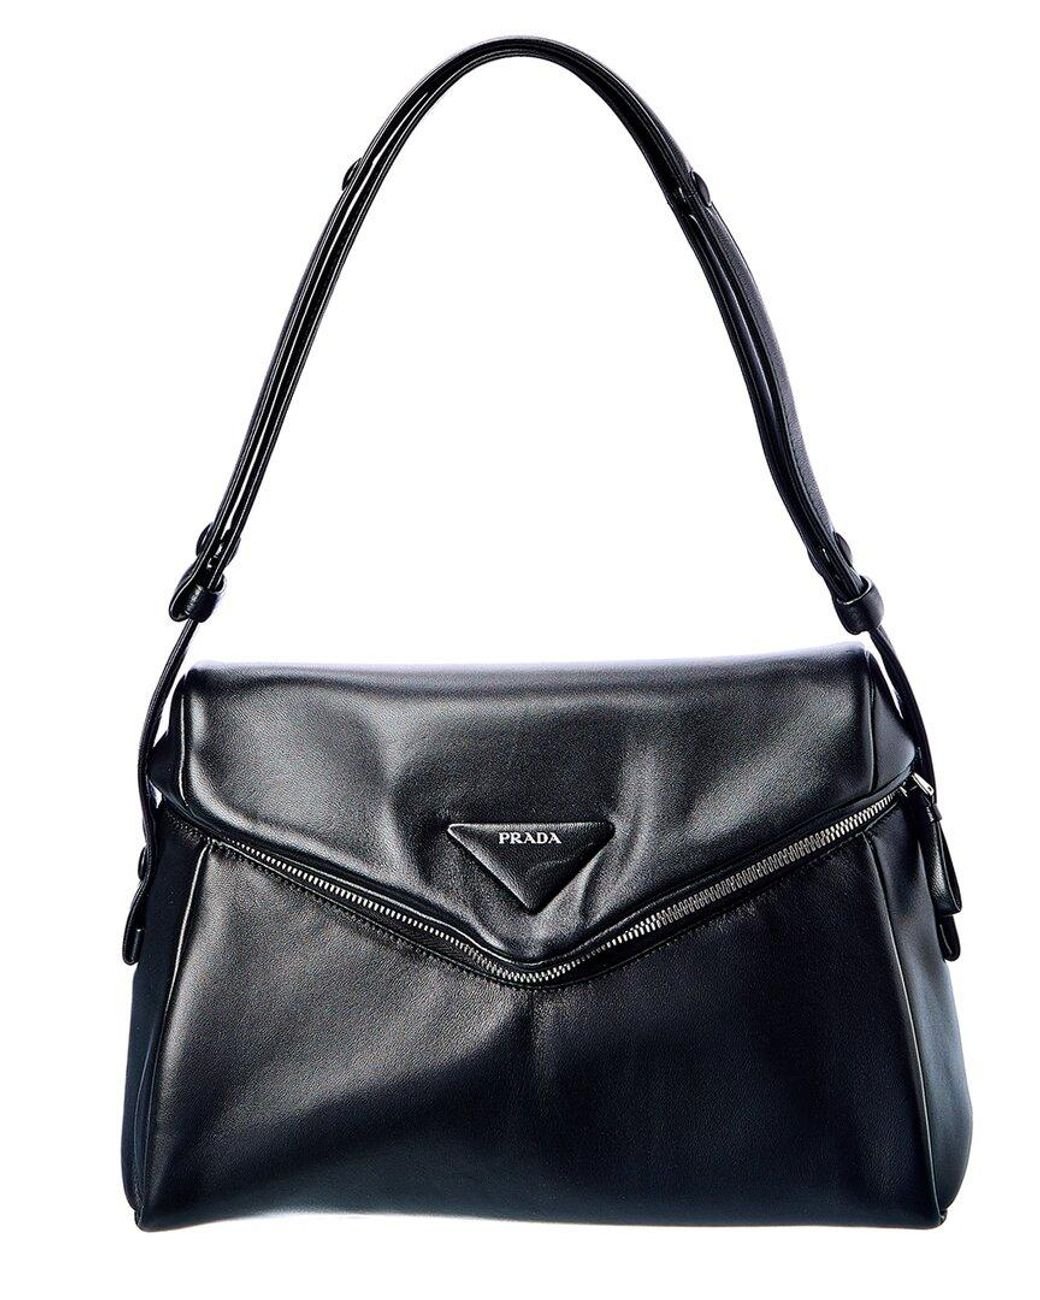 Prada Signaux Nappa Leather Shoulder Bag in Black